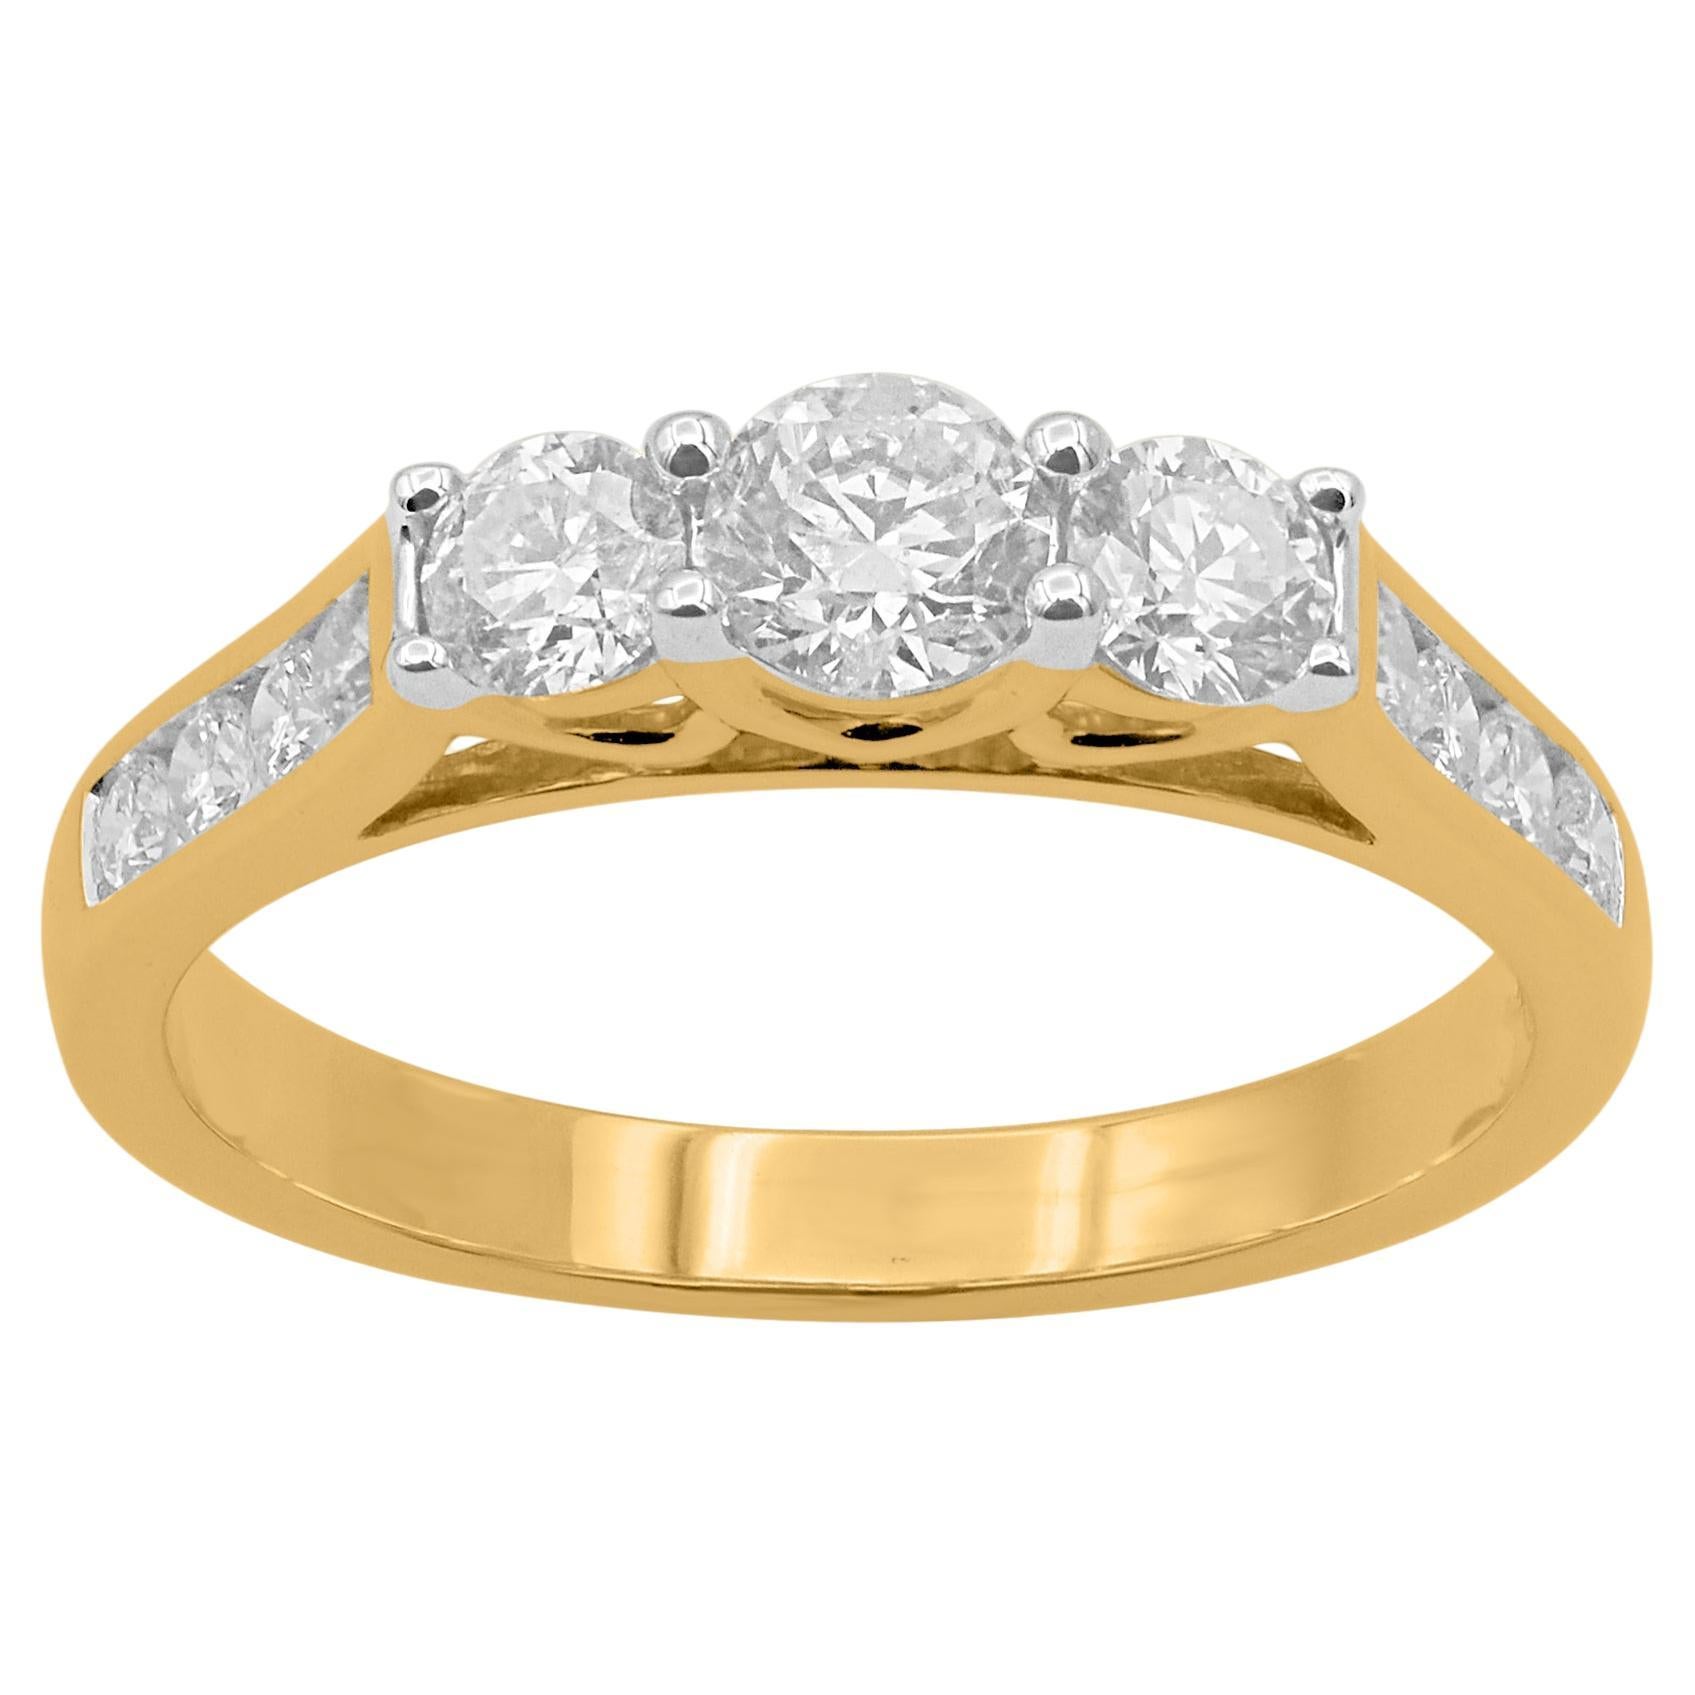 TJD 1.0 Carat Brilliant Cut Diamond Three Stone Wedding Ring 14KT Yellow Gold For Sale